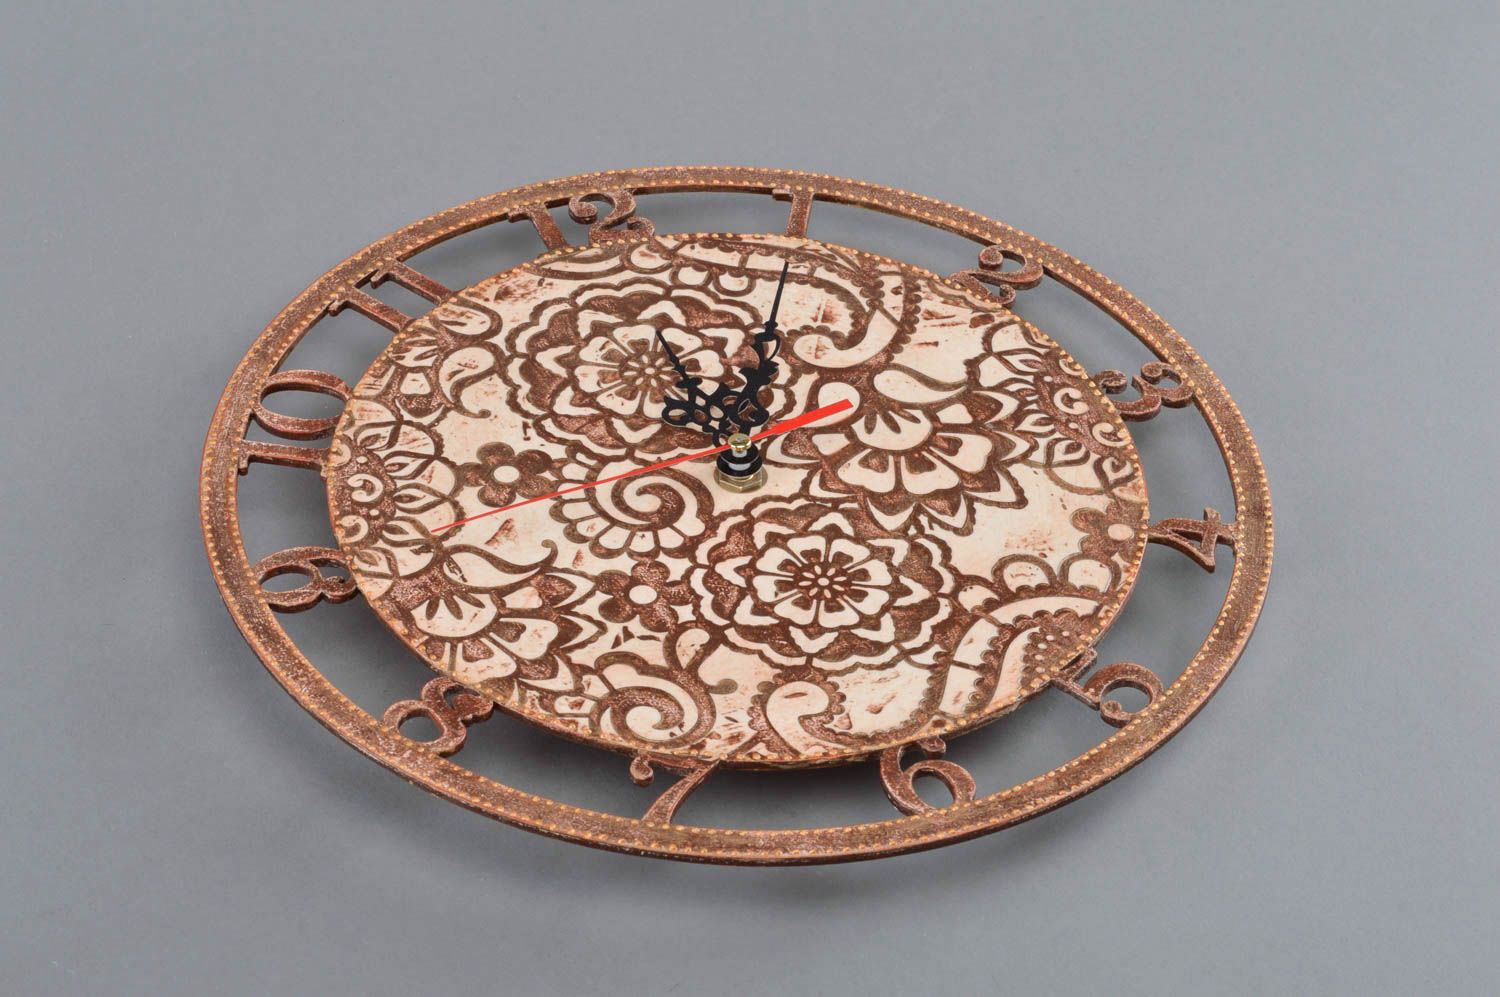 Reloj de madera artesanal con ornamento original bonito en técnica de decoupage foto 3